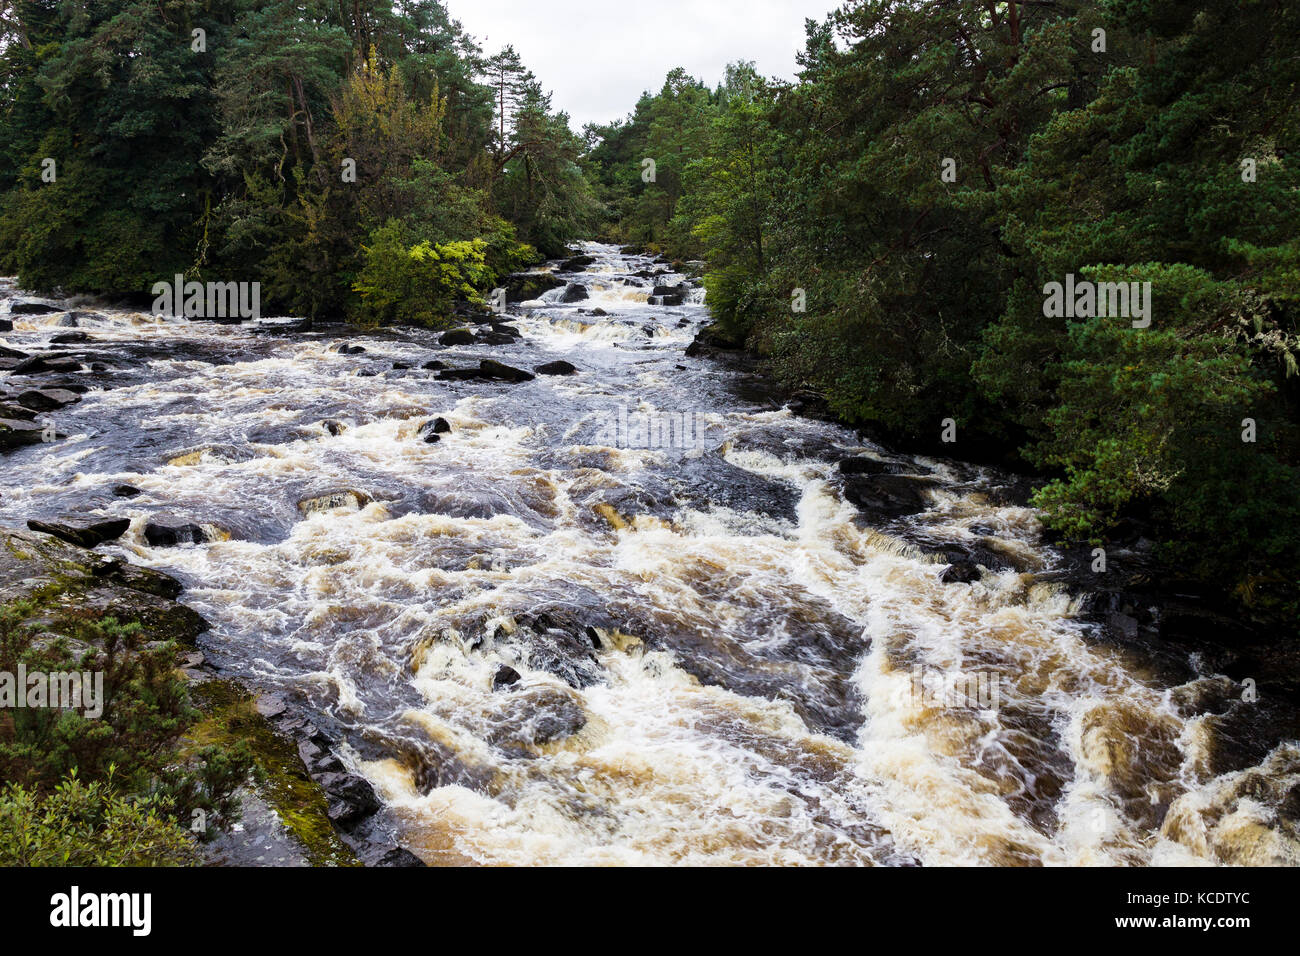 The Falls of Dochart run through the small town of Killin, in Loch Lomond & The Trossachs National Park, Scotland. Stock Photo